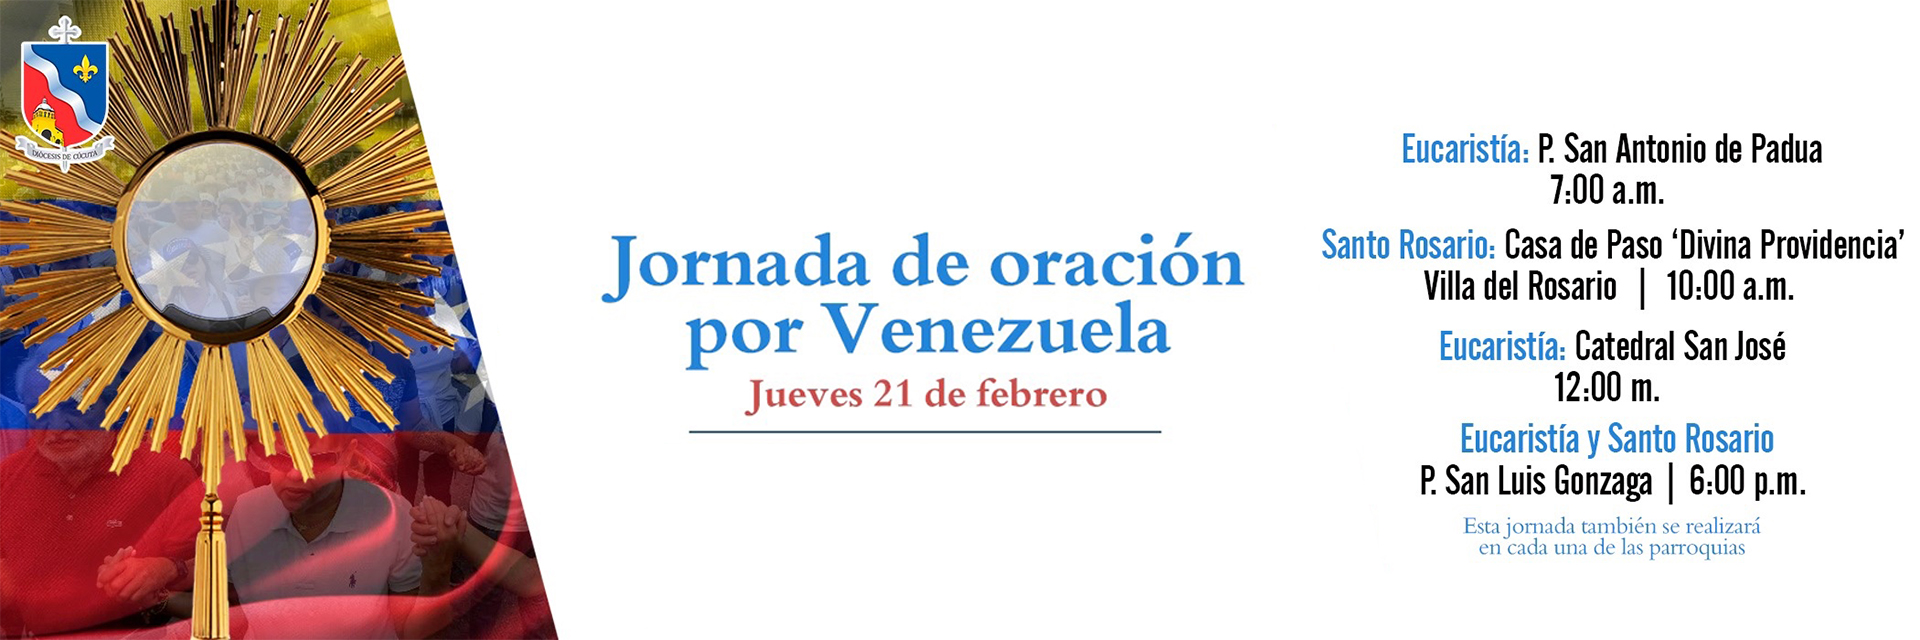 Diócesis de Cúcuta convoca a jornada de oración por Venezuela